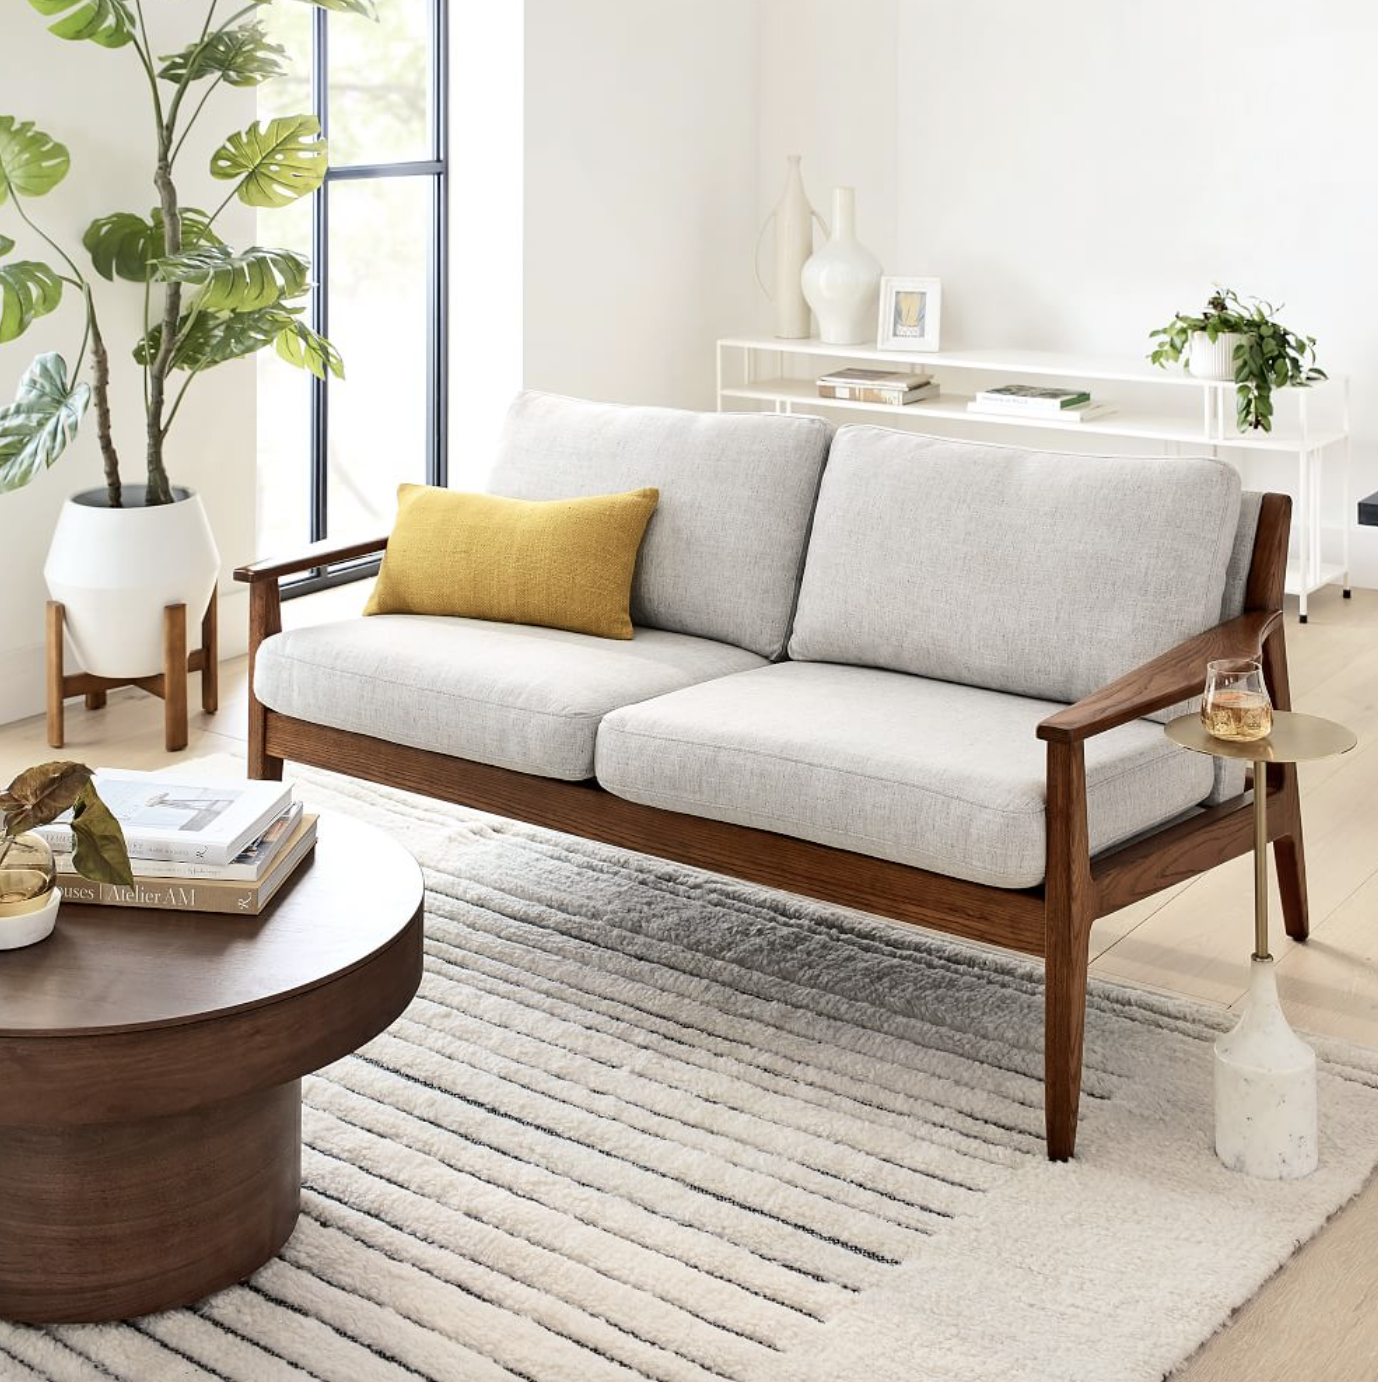 wooden sofa living room